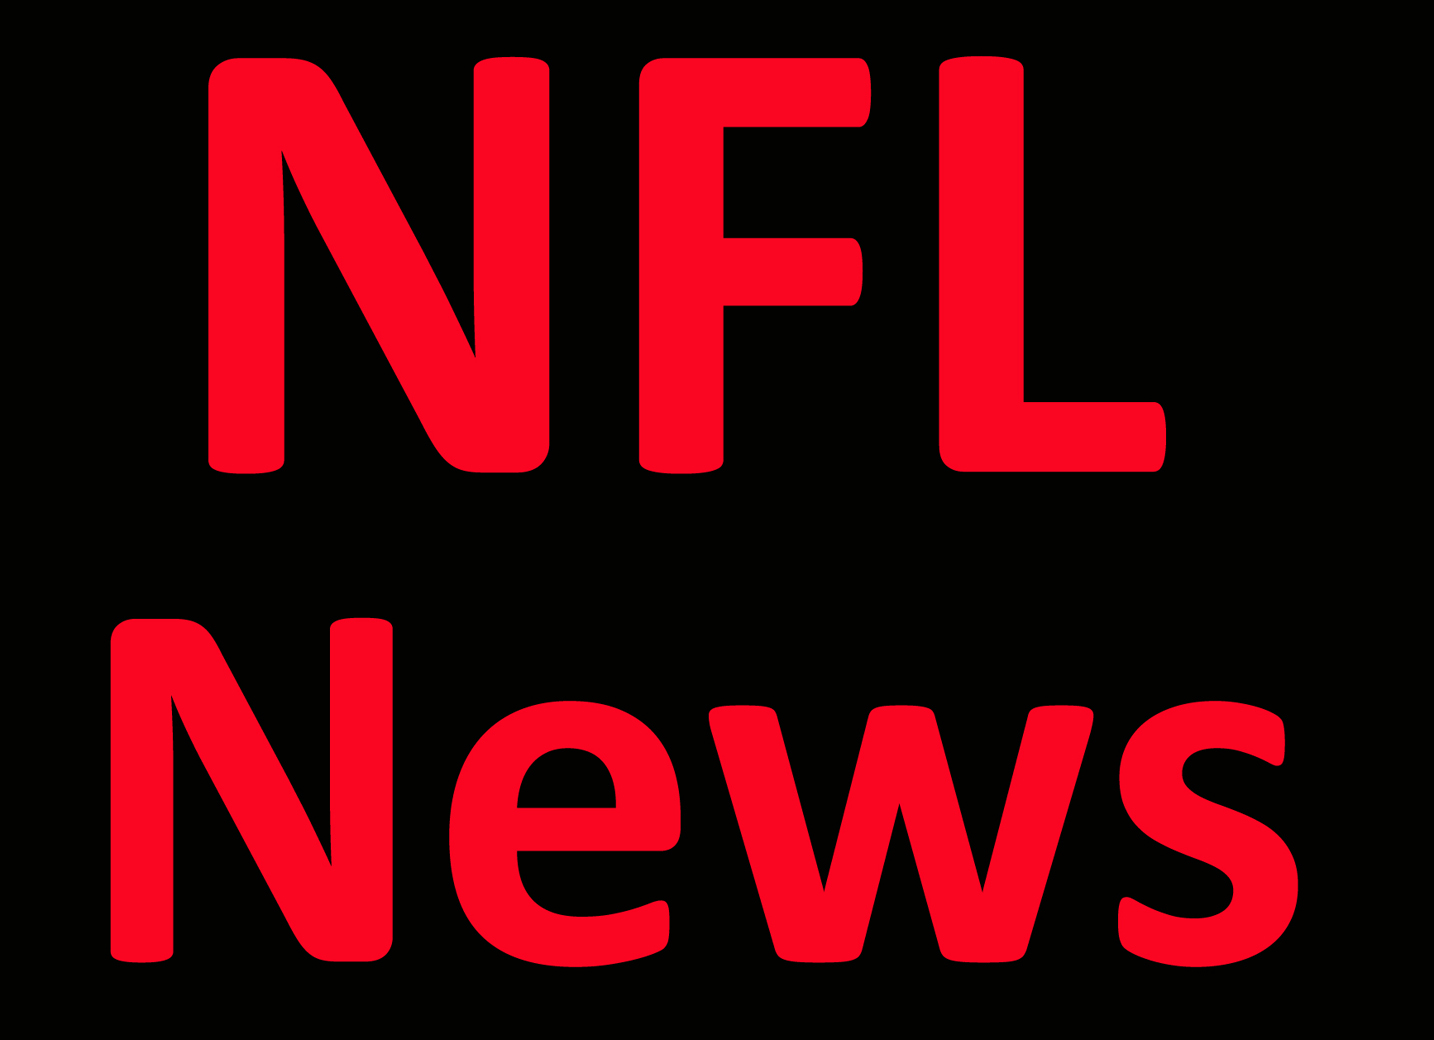 NFL News: Commanders QB Heinicke to start vs. Packers Per Report